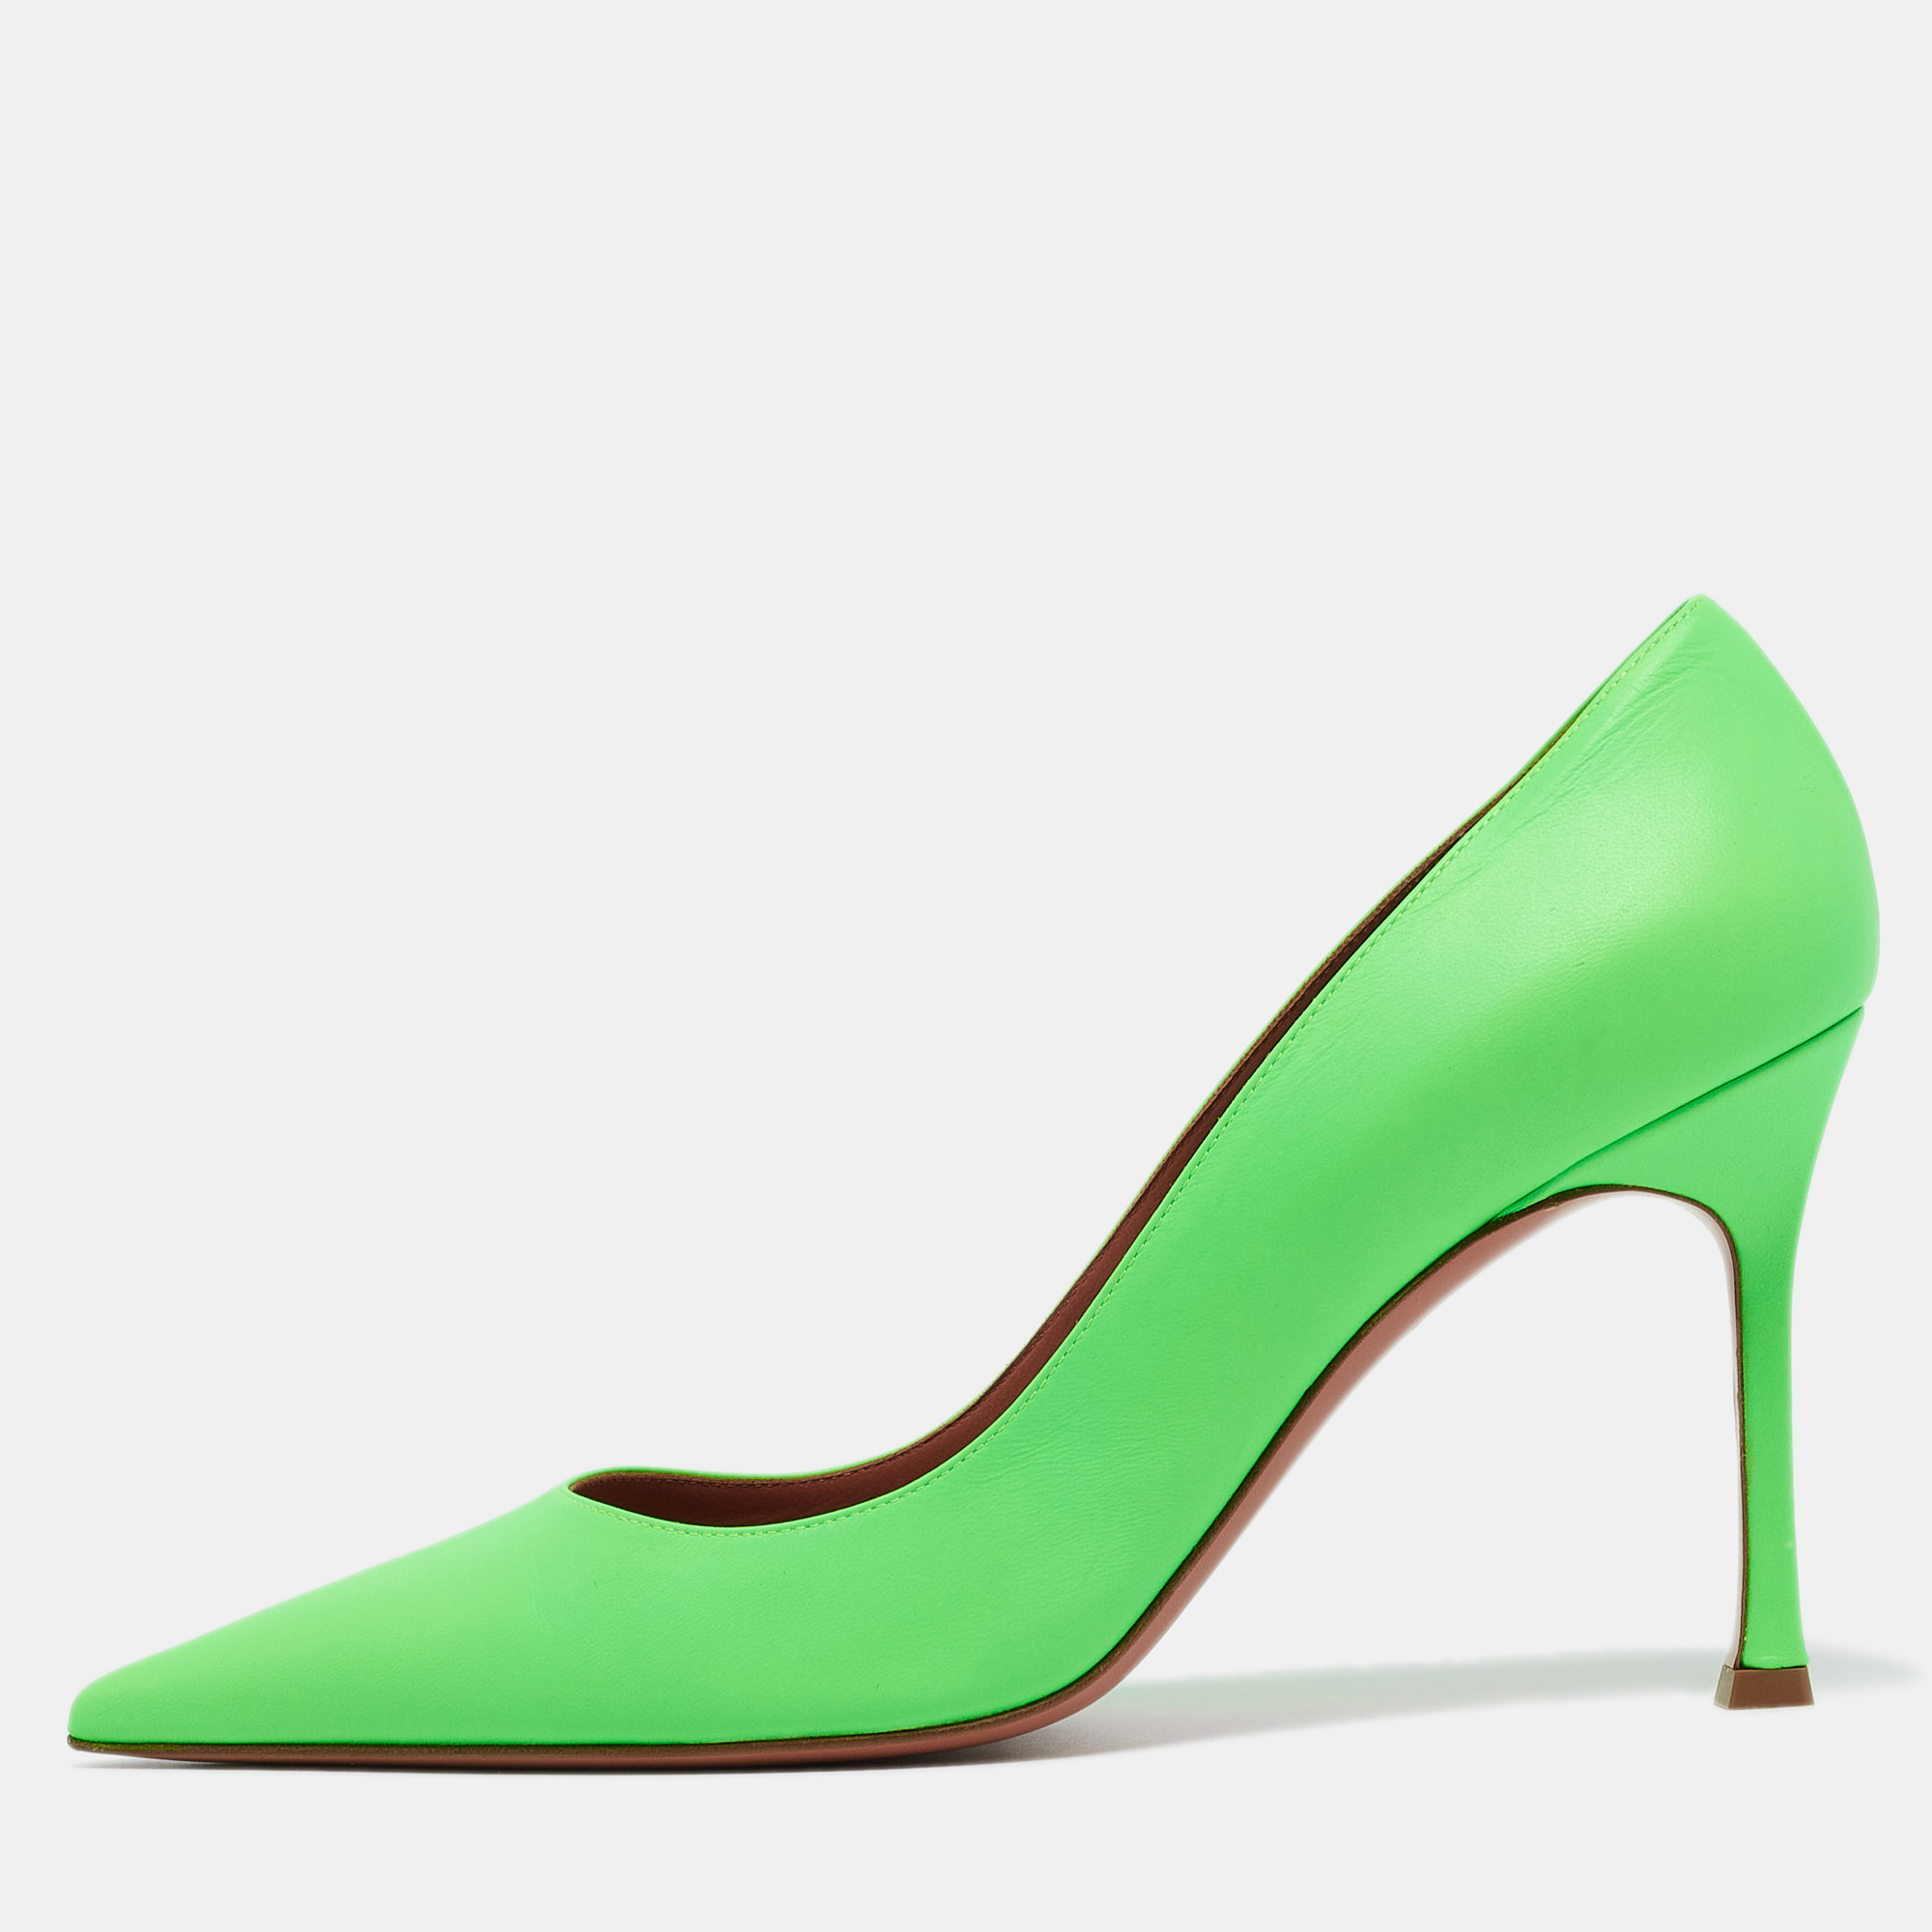 Amina muaddi neon green leather pointed toe pumps size 41